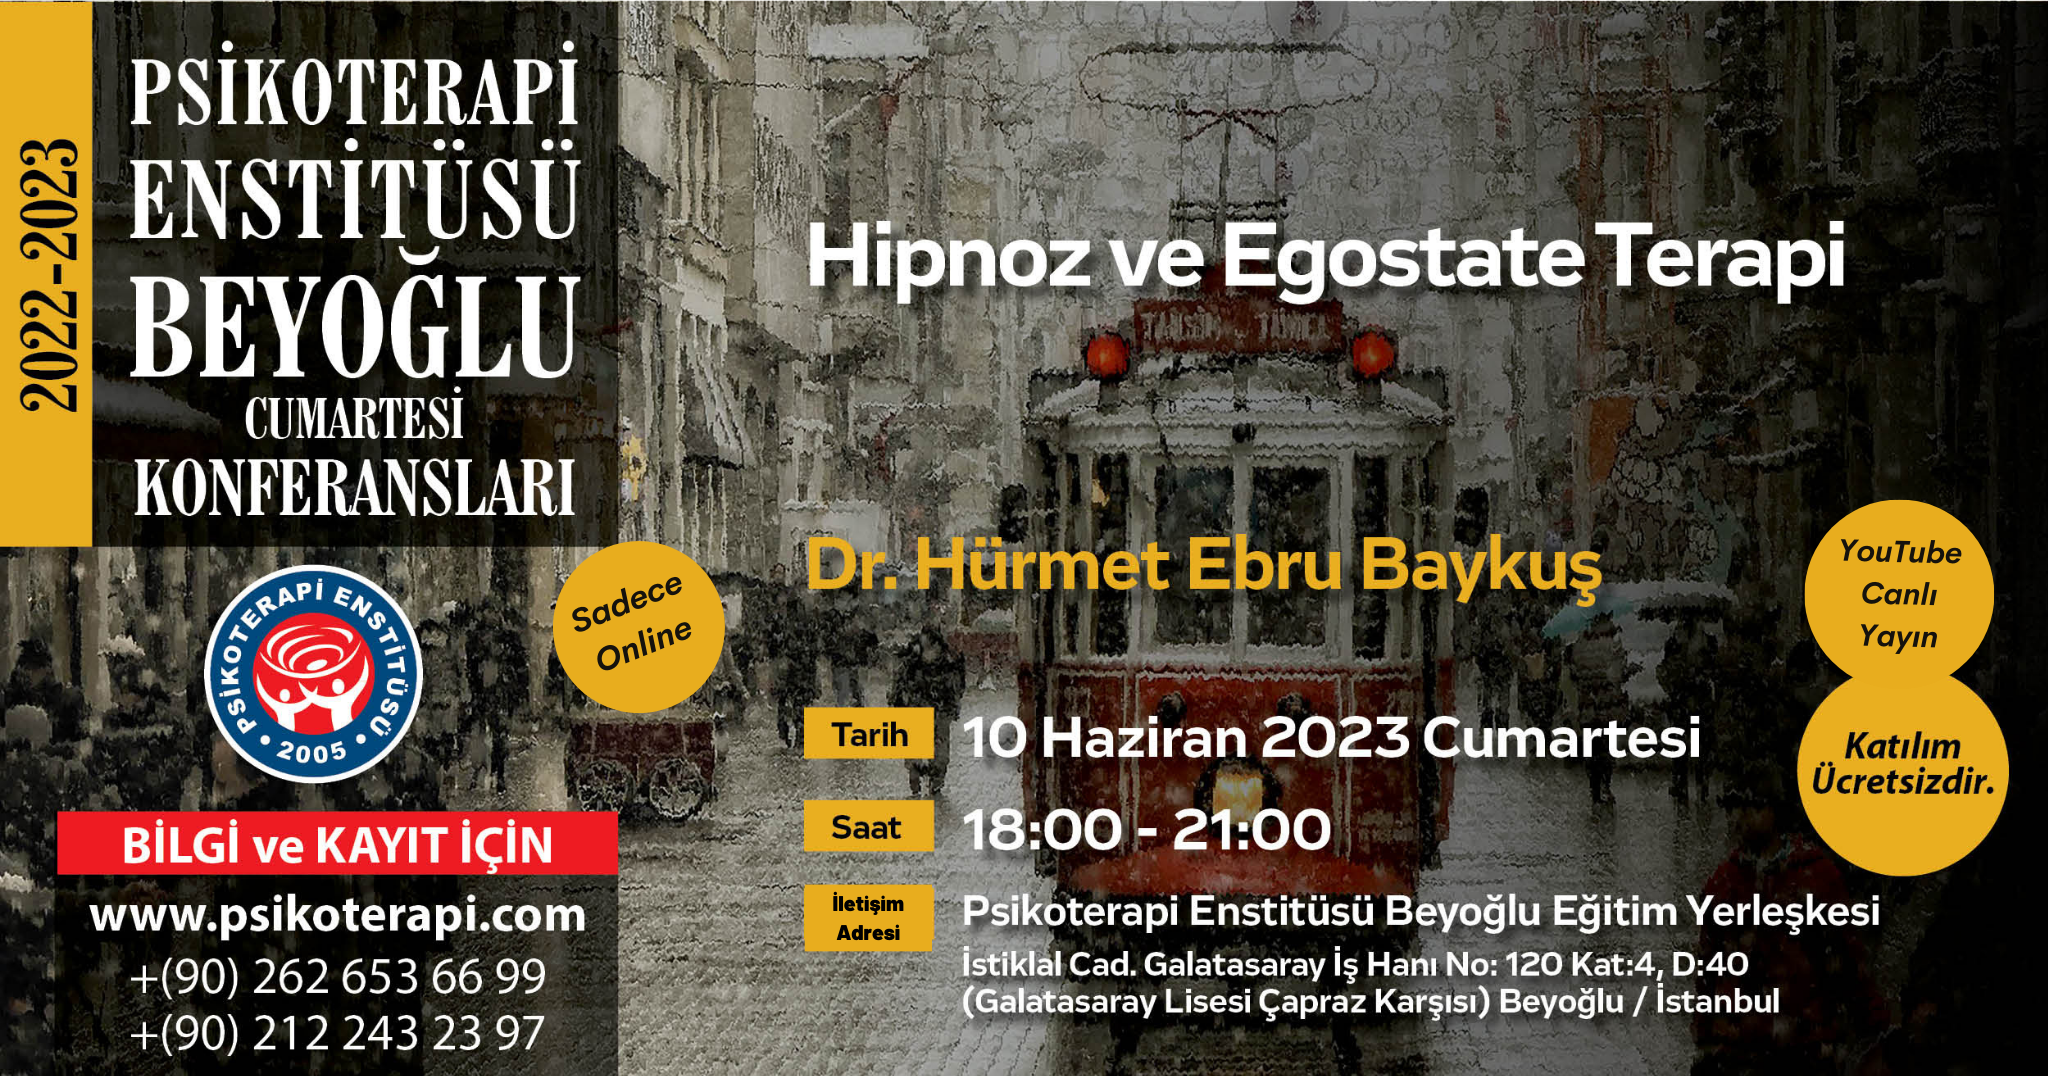 Dr. Hürmet Ebru Baykuş- "Hipnoz ve Egostate Terapi"